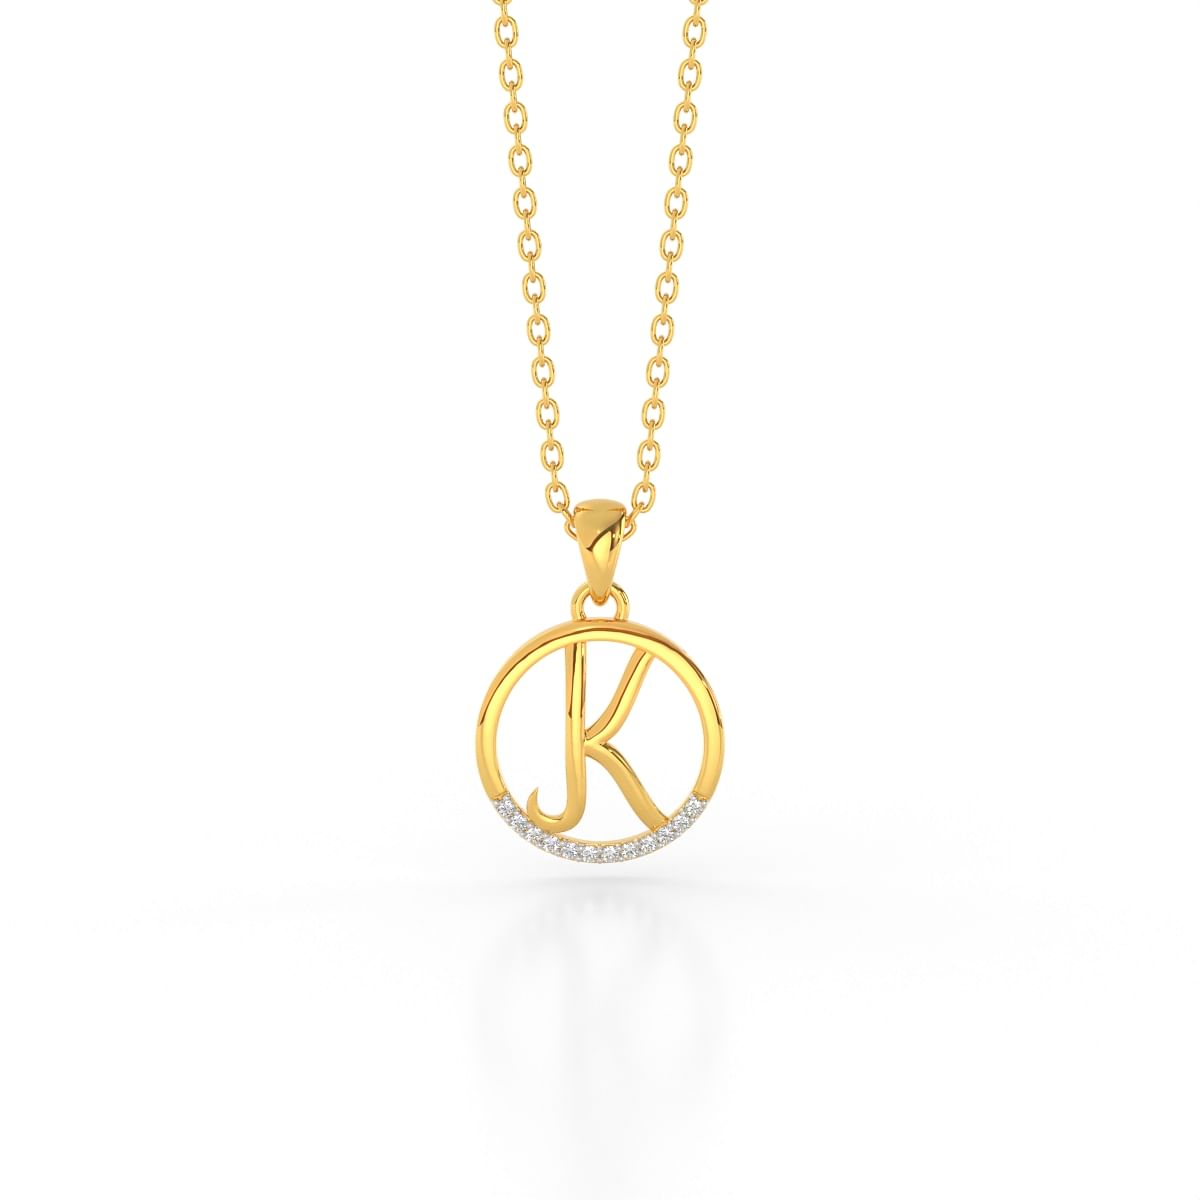 K alphabet letter yellow gold diamond pendant